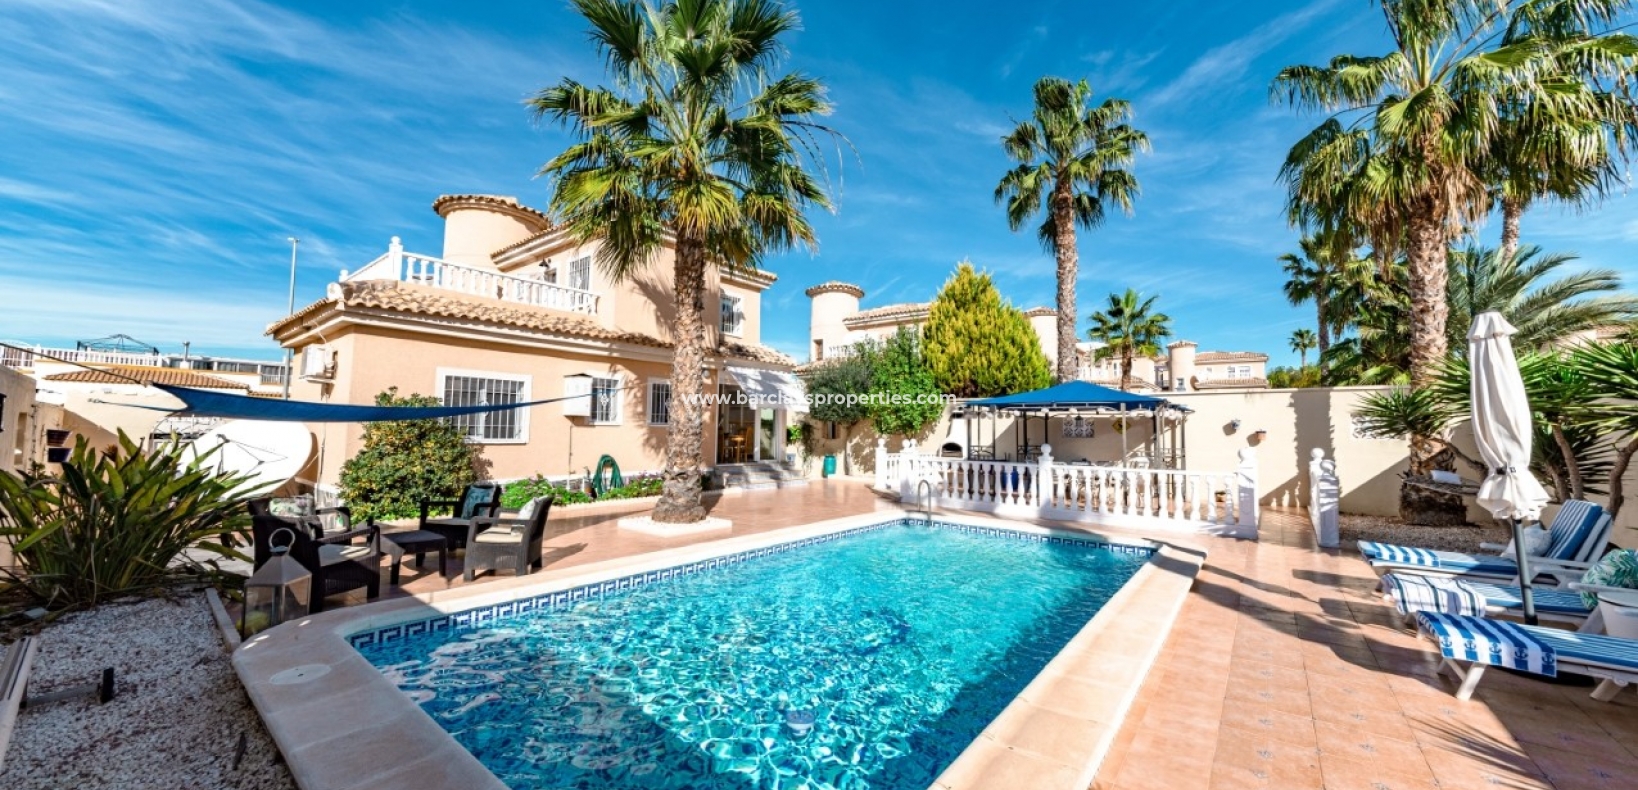  Jardin - Villa de prestige à vendre dans l'urbanisation La Marina Espagne